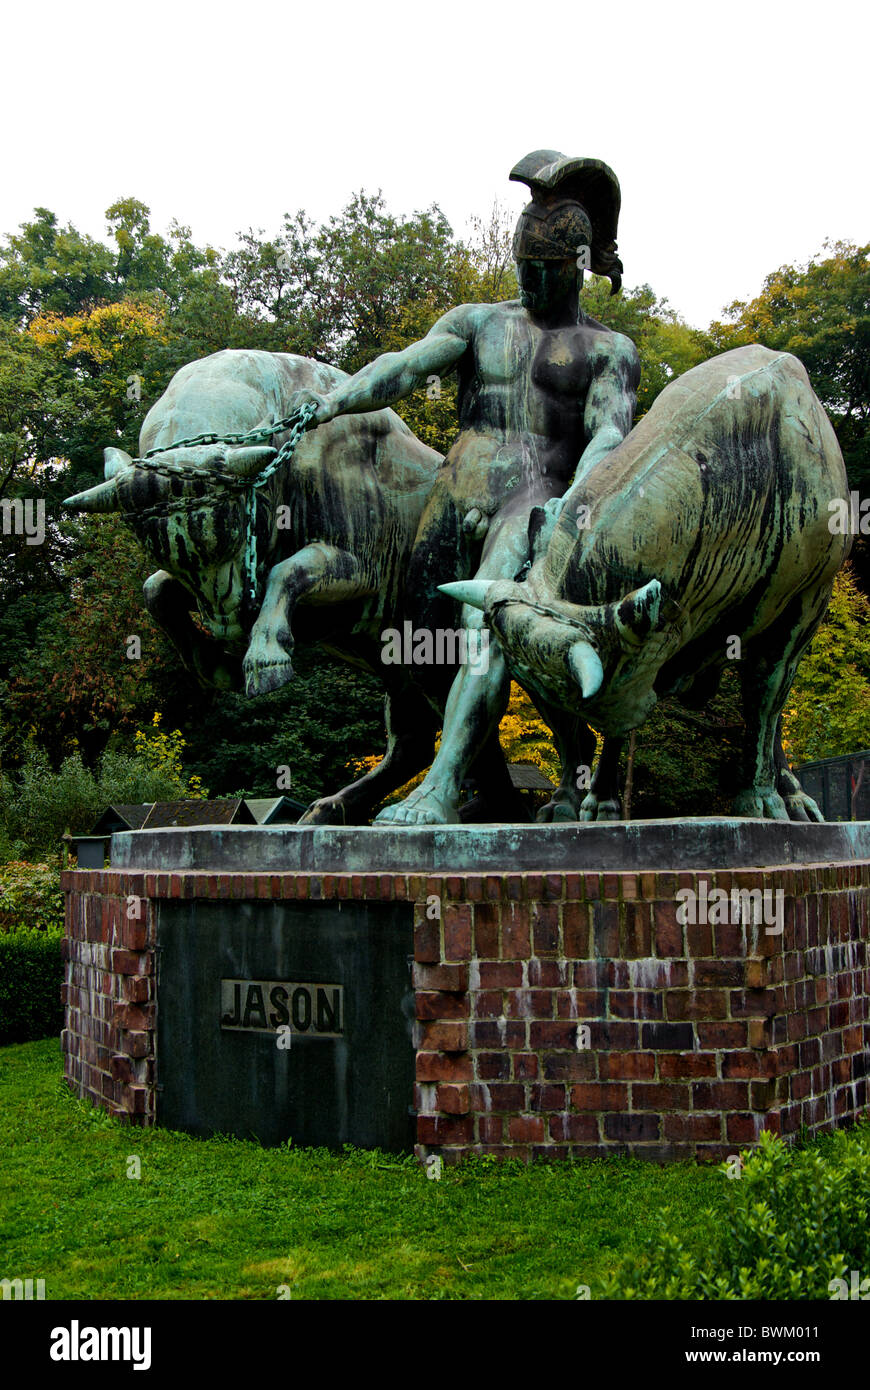 Bronze statue of Jason controlling two bulls Leipzig Zoological Garden Stock Photo